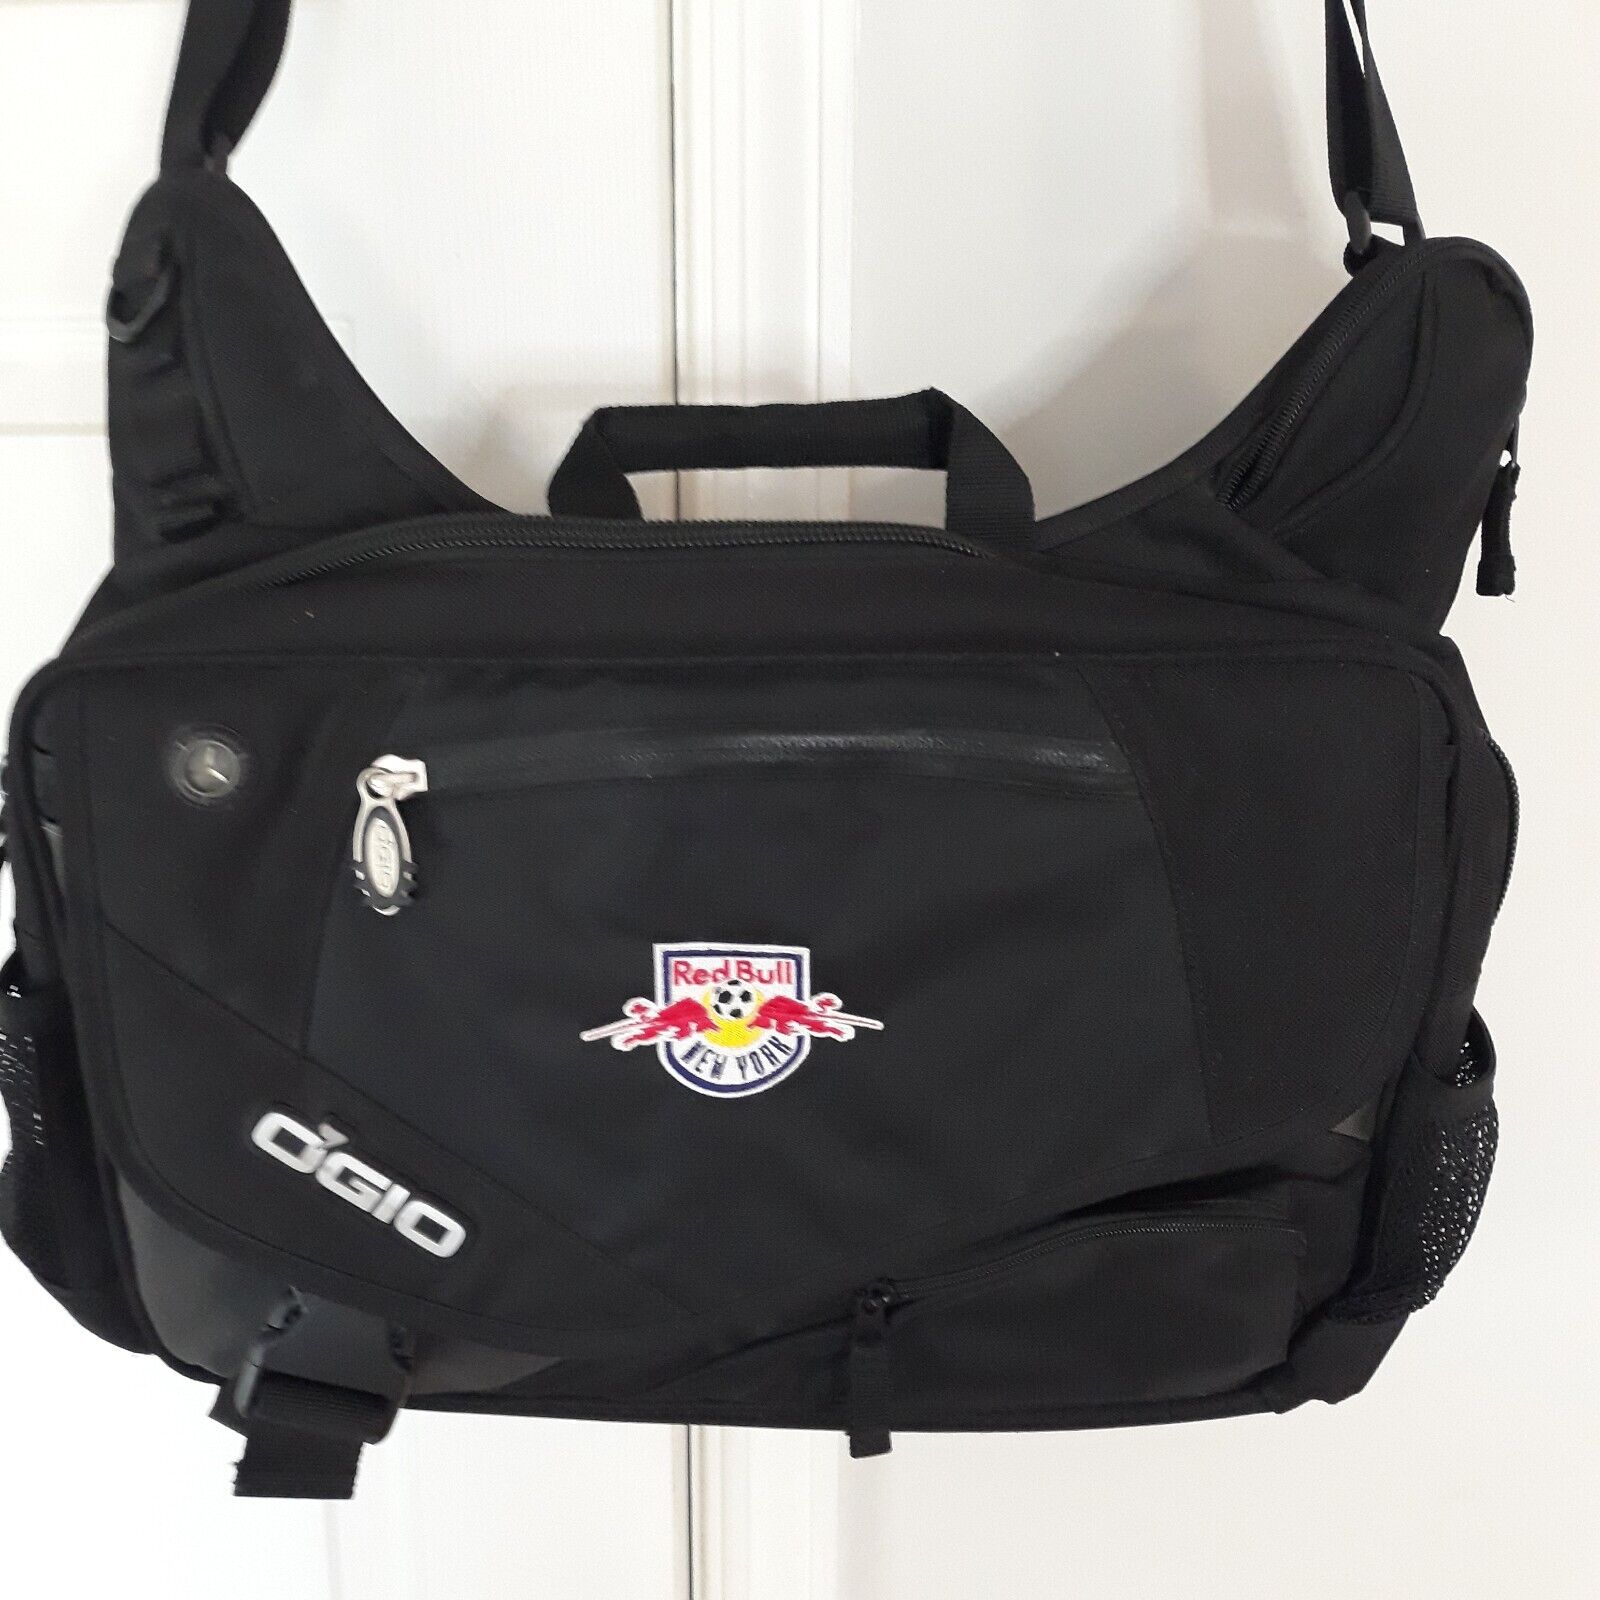 Ogio custom 2005 computer bag, large, black, water bottle/cell phone pockets